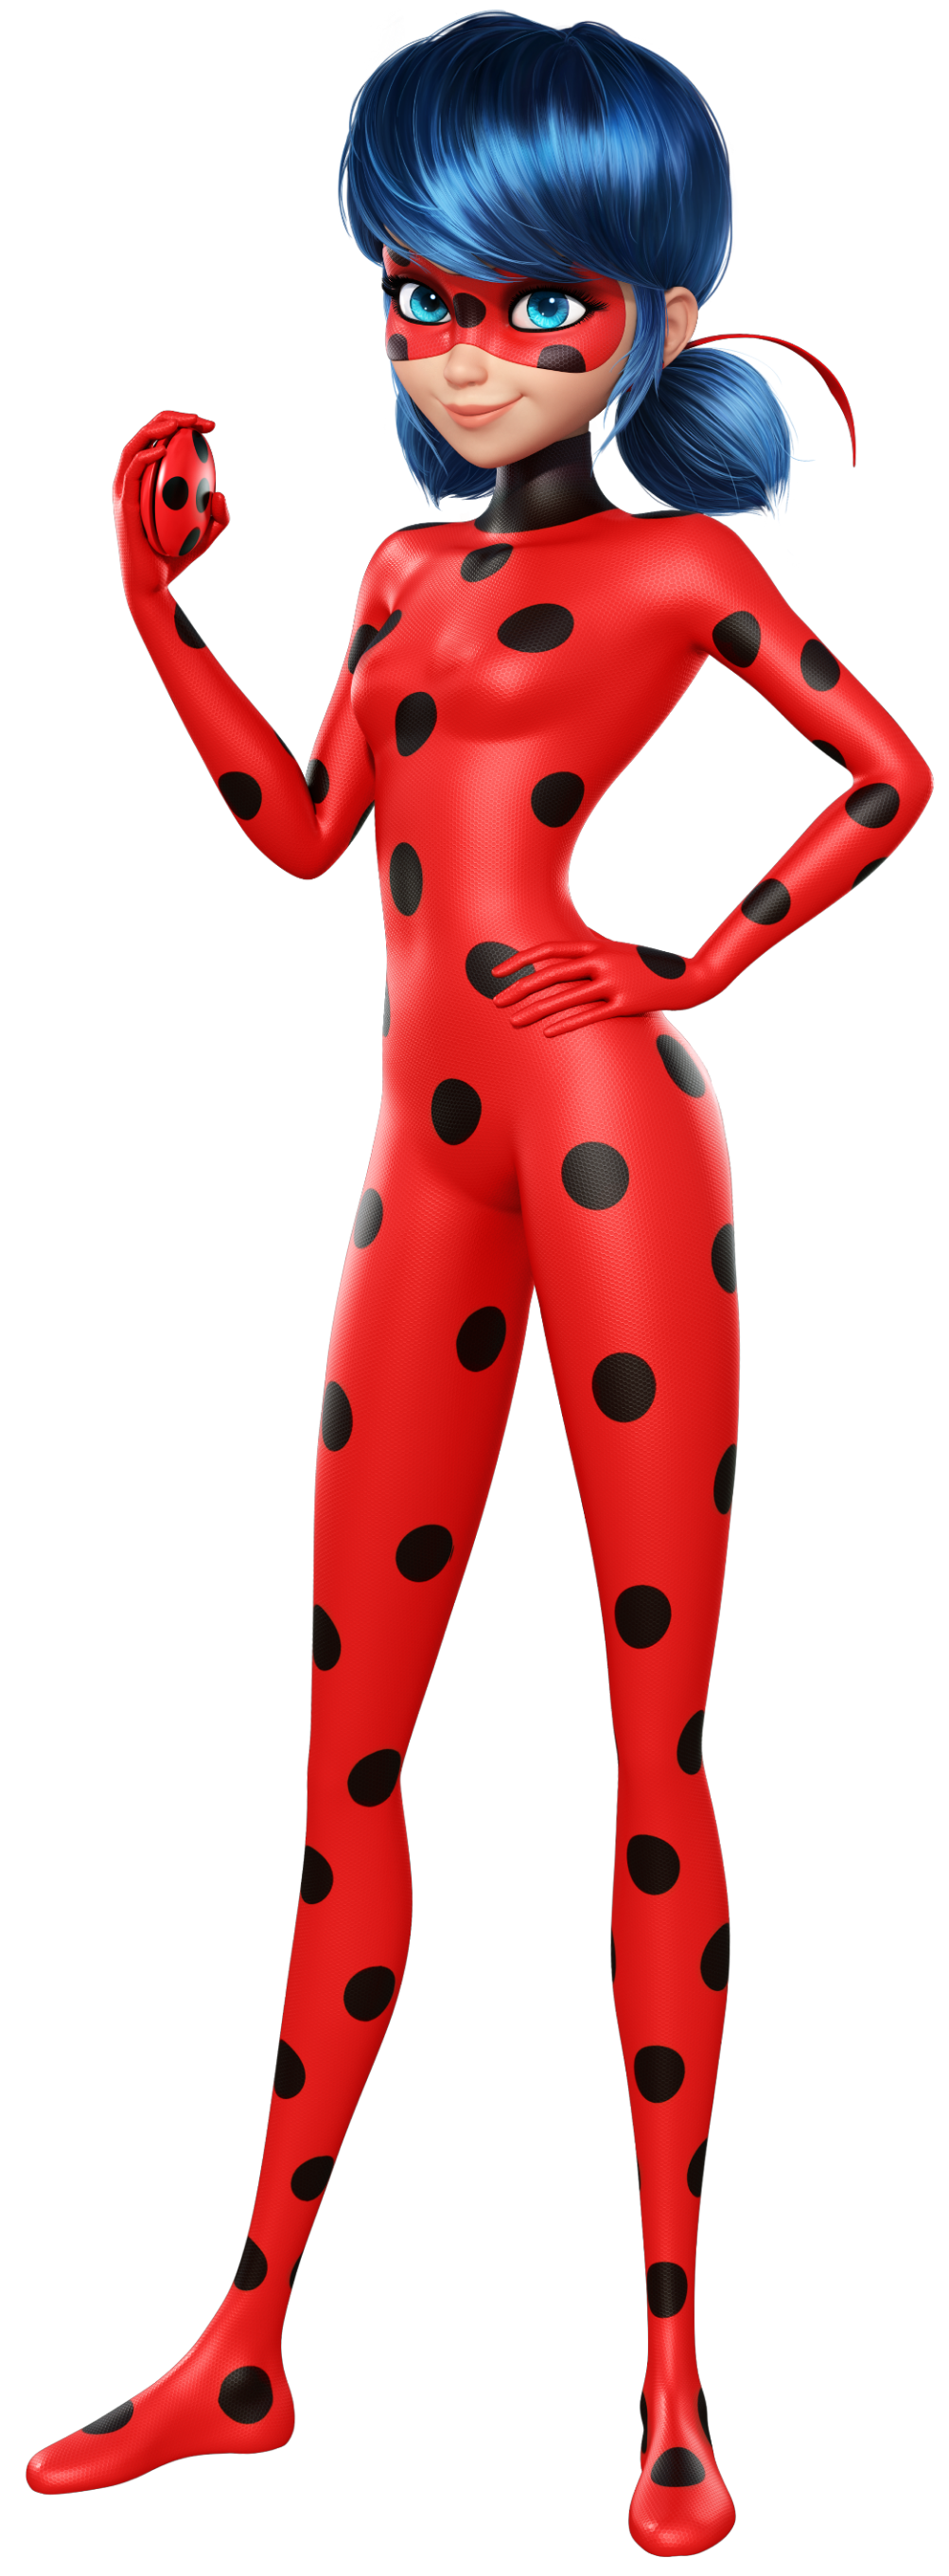 Miraculous Ladybug: Marinette Dupain-Cheng / Characters - TV Tropes